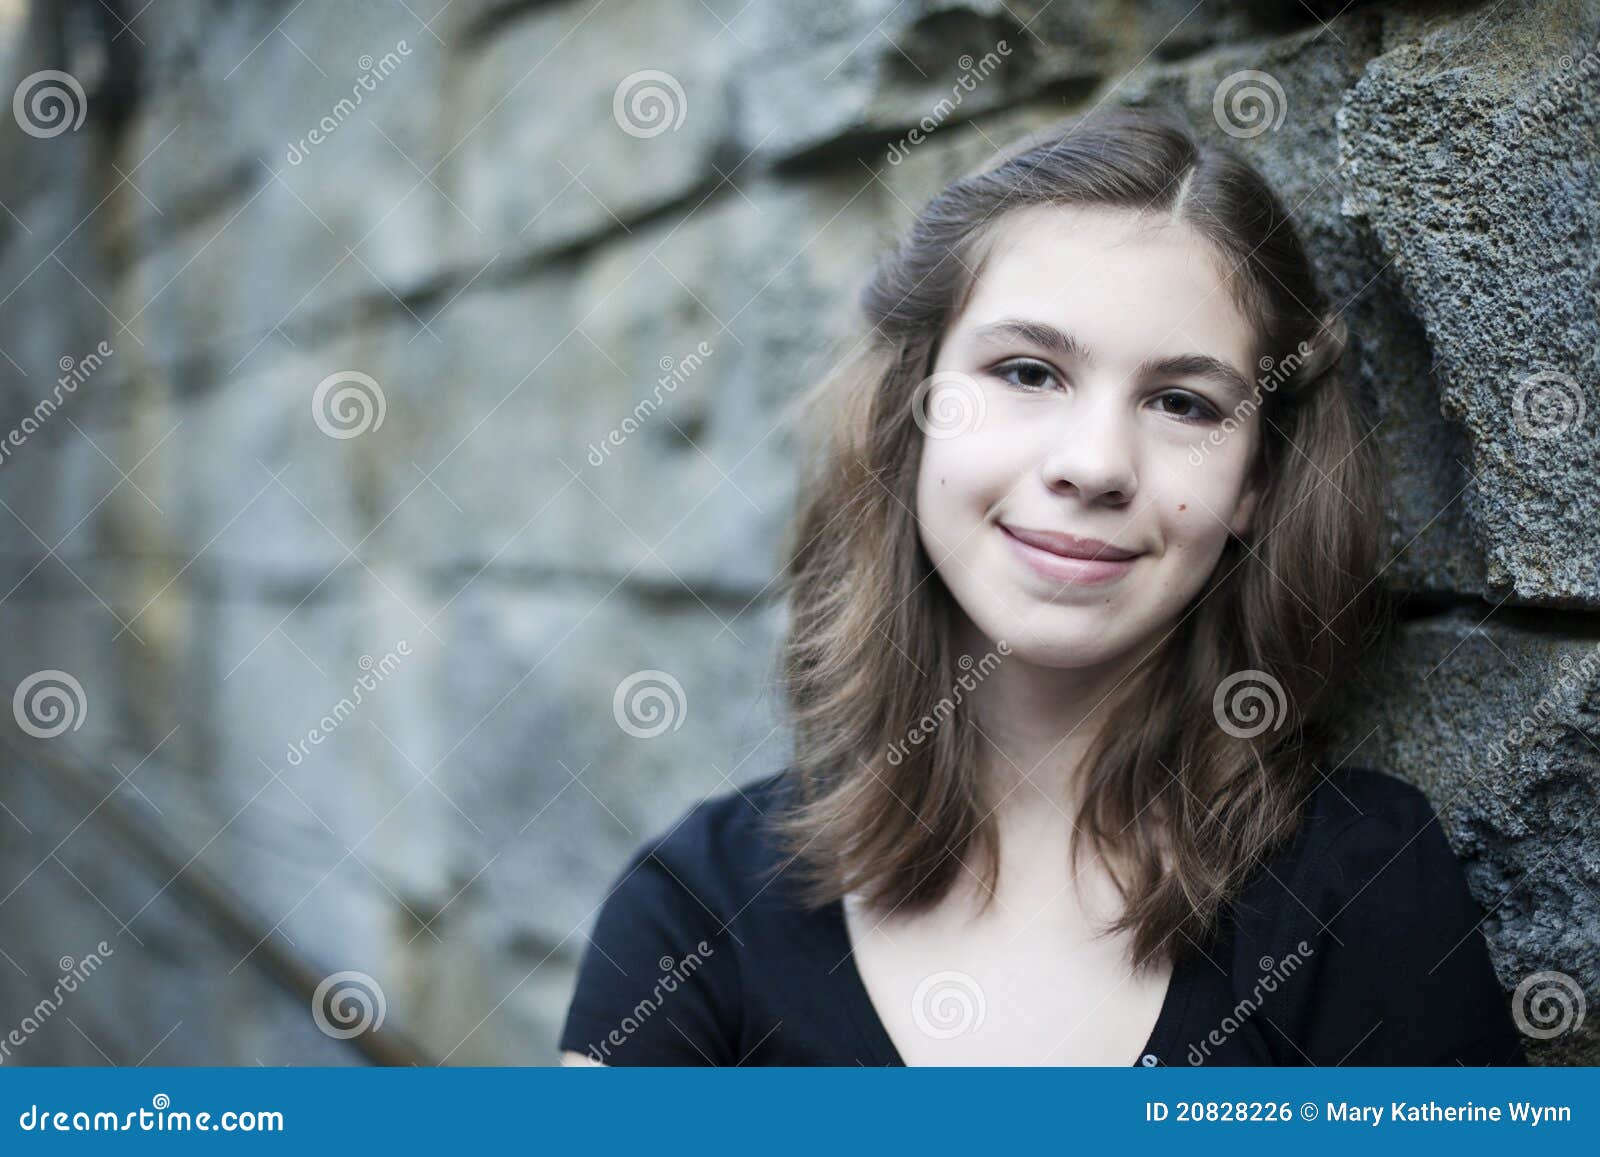 Young teen girl Stock Photos, Royalty Free Young teen girl Images